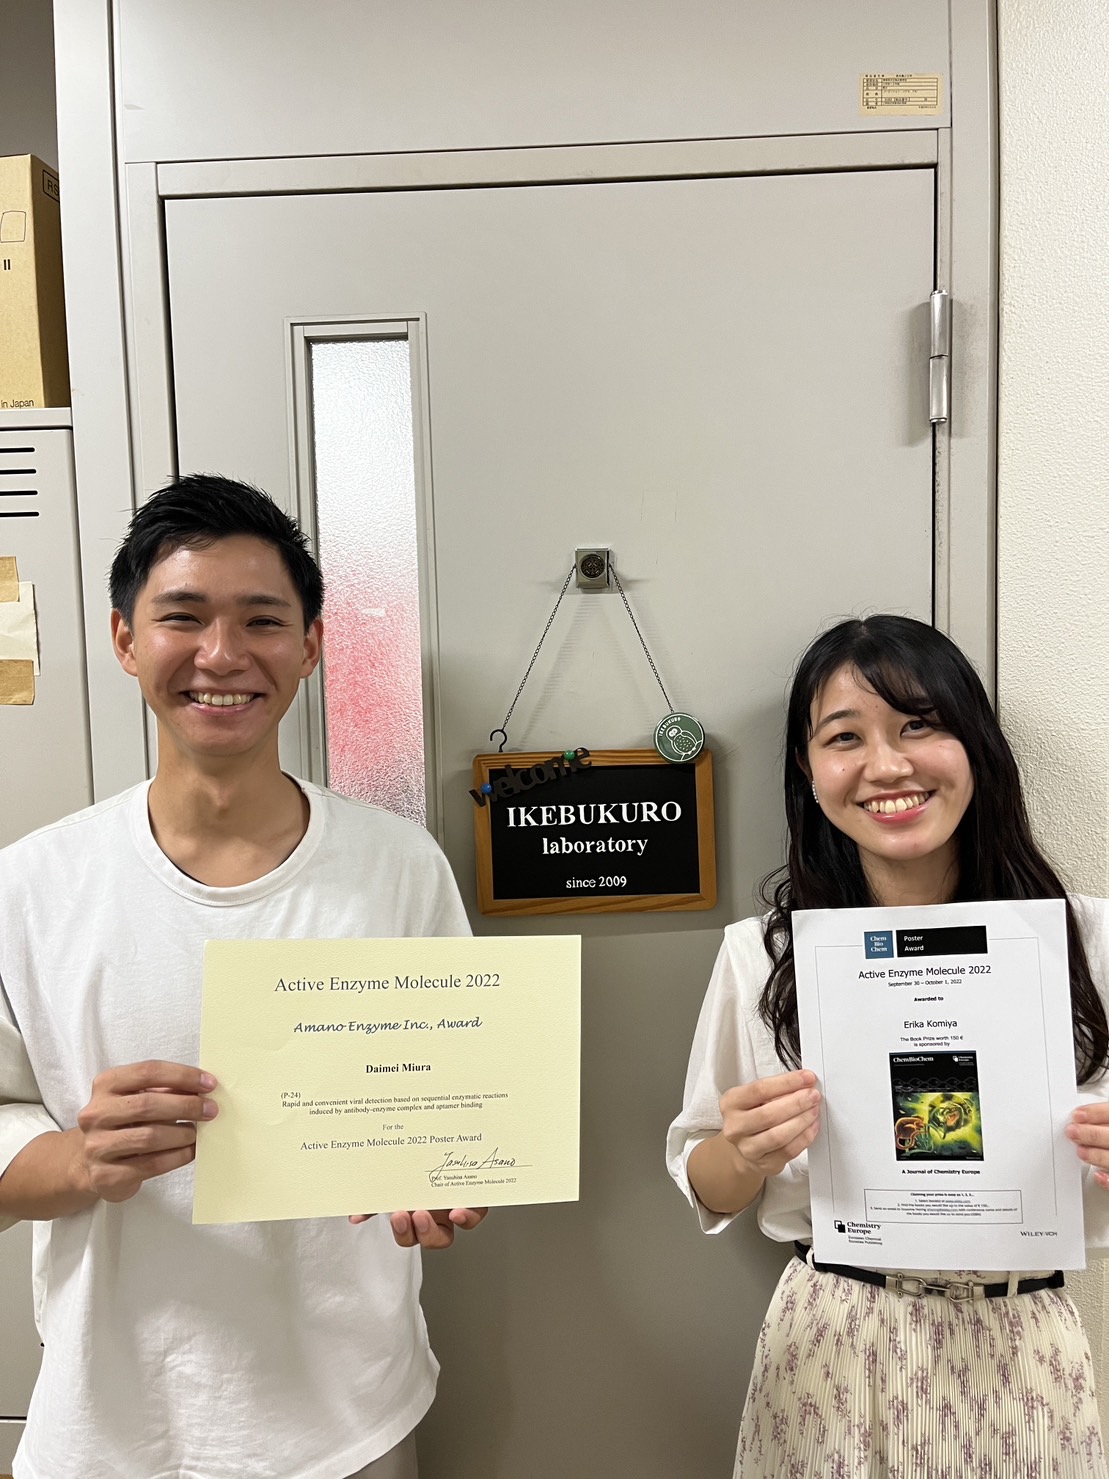 「Amano Enzyme Inc., award」を受賞した三浦大明さんと、「Chem Bio Chem award] を受賞した小宮英里香さん